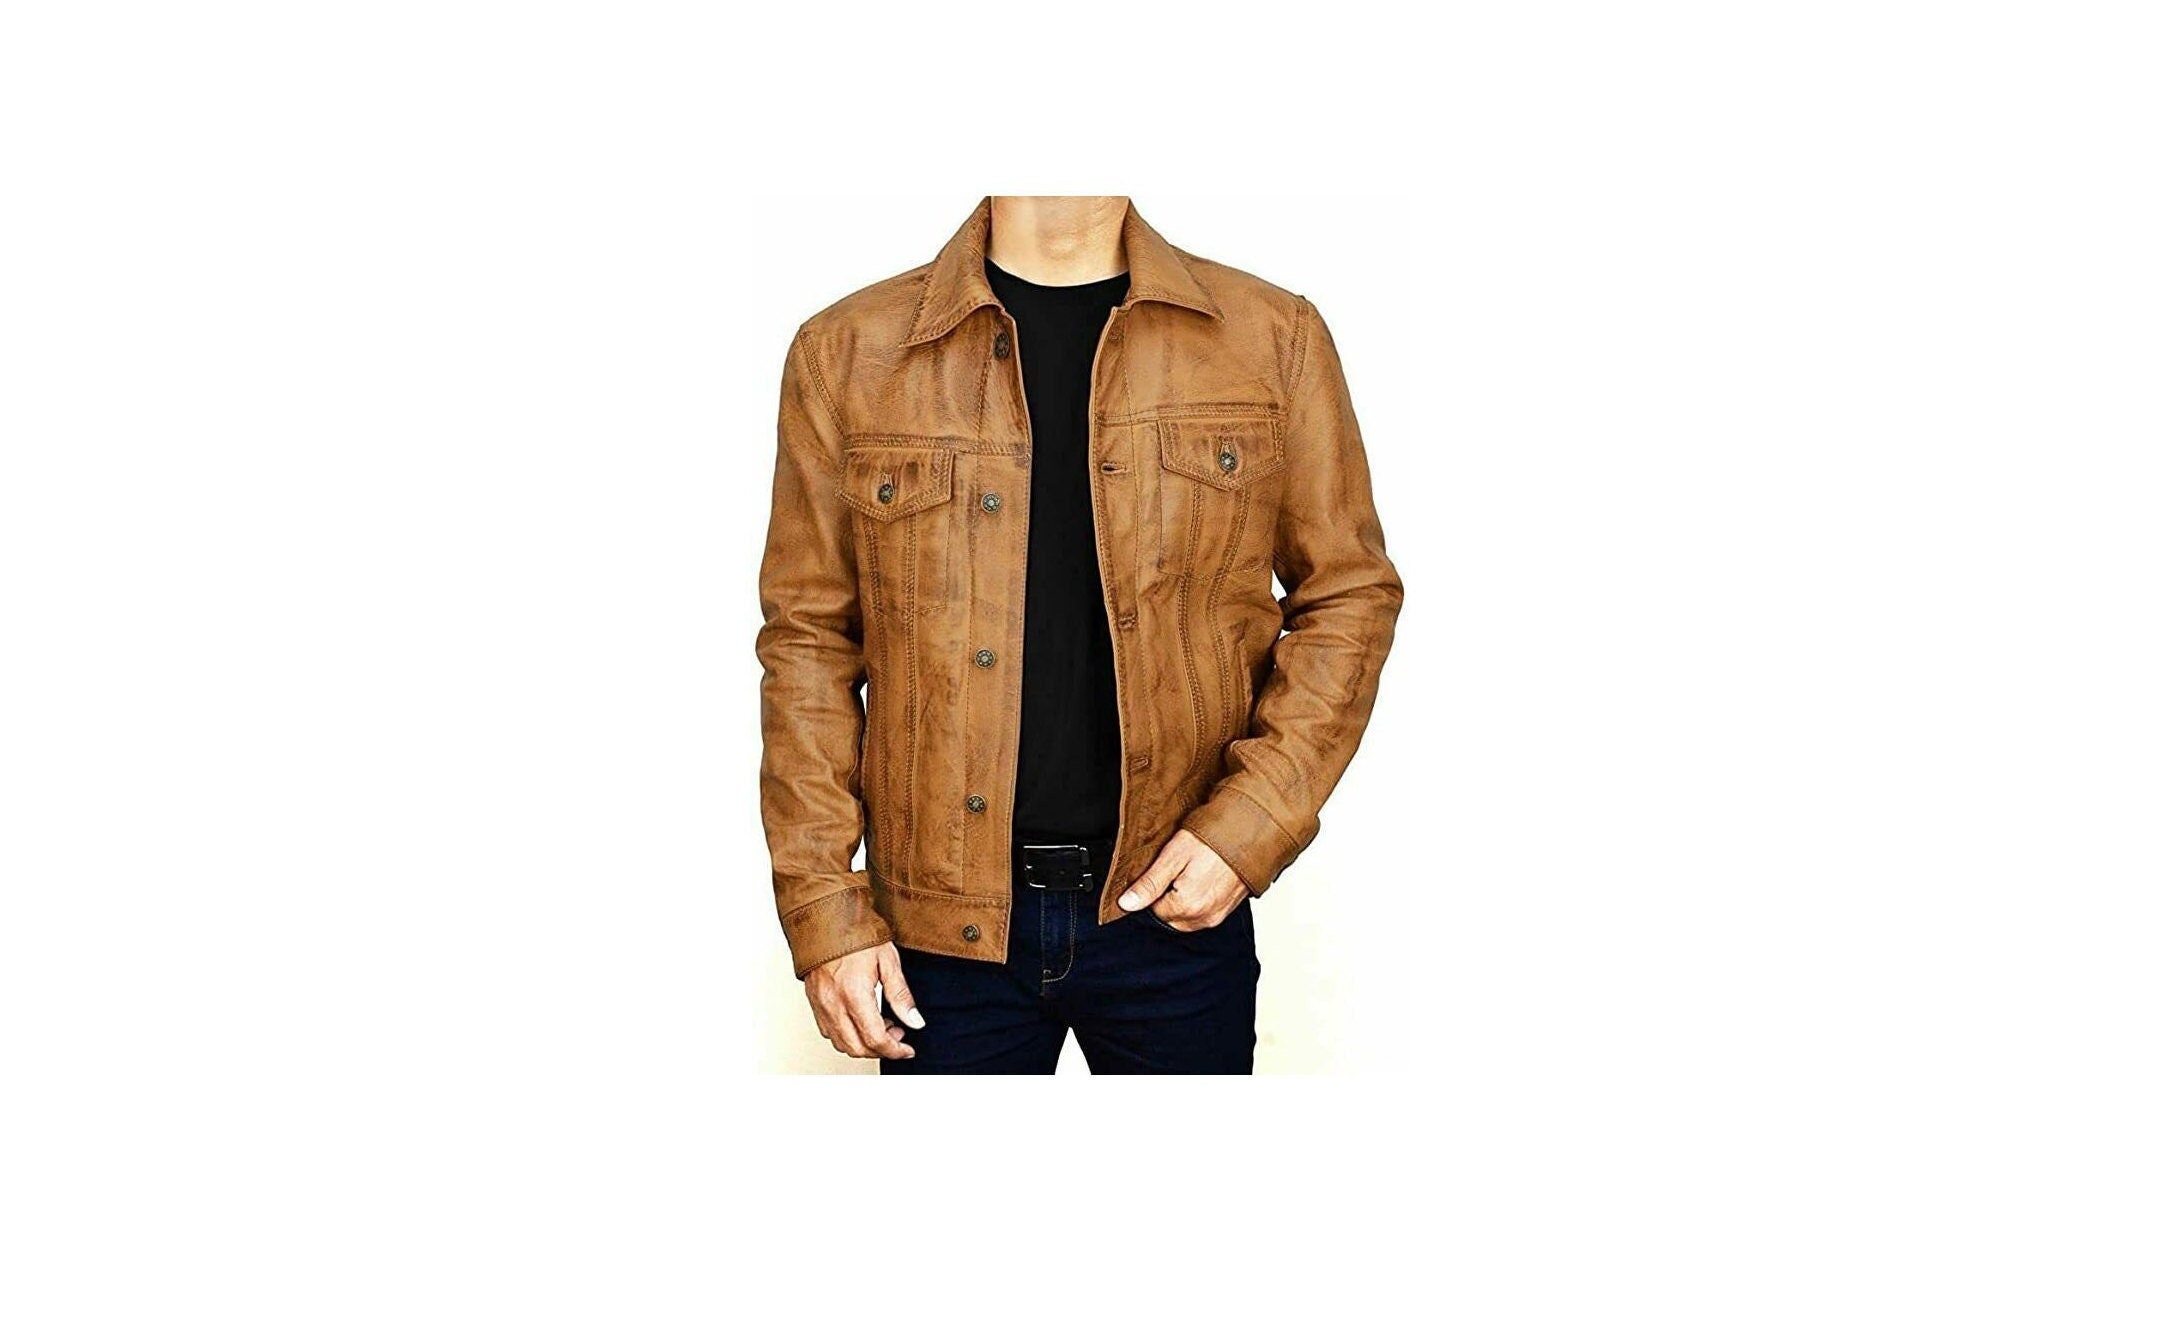 Men's Leather Jacket Trucker Jacket Fitted Jacket - Etsy